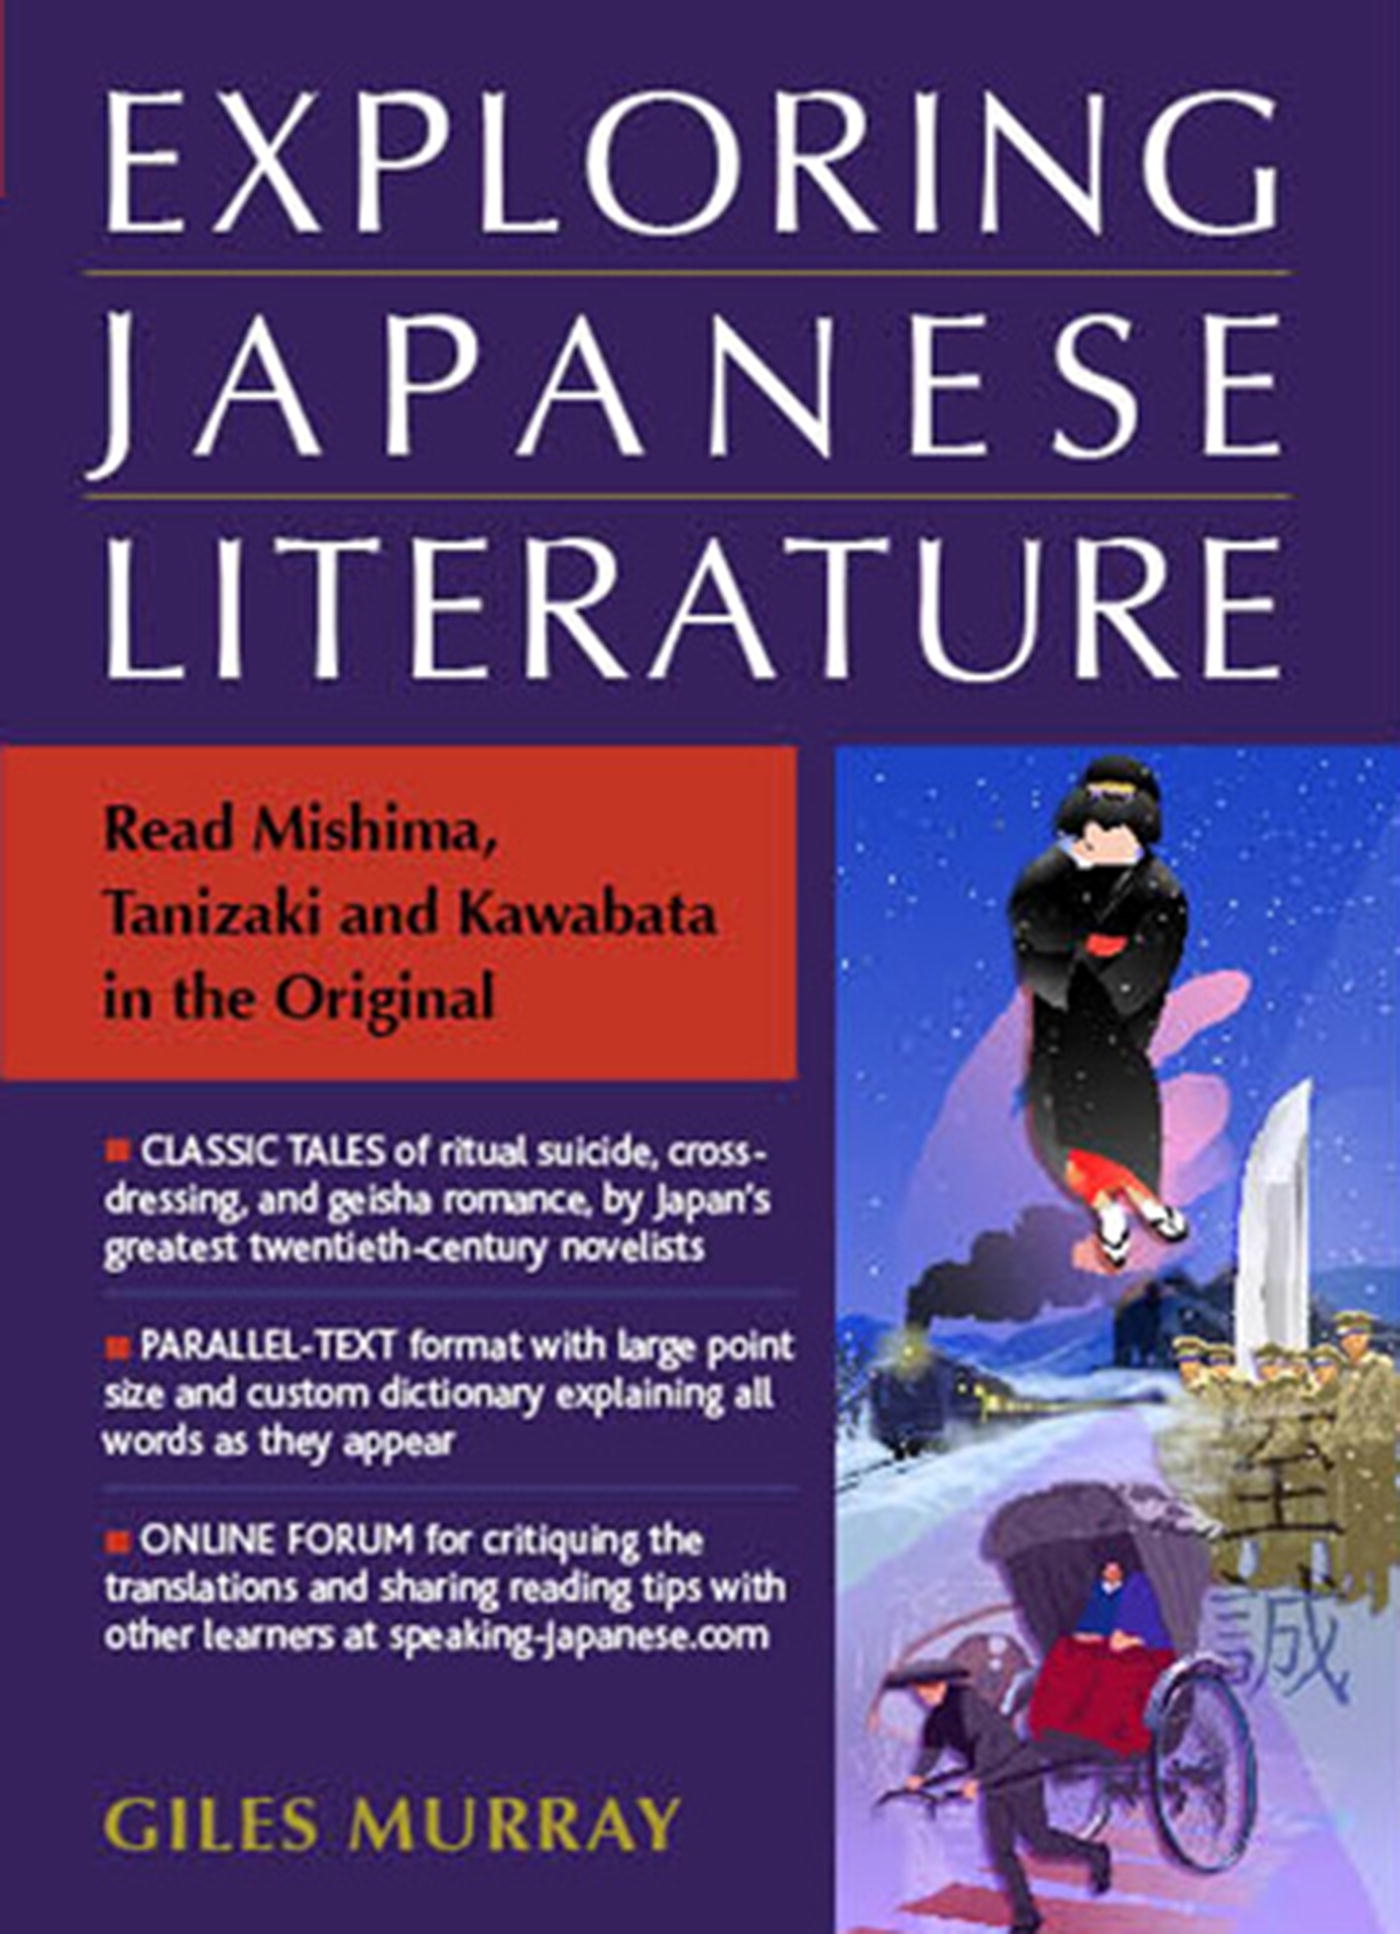 study literature in japan